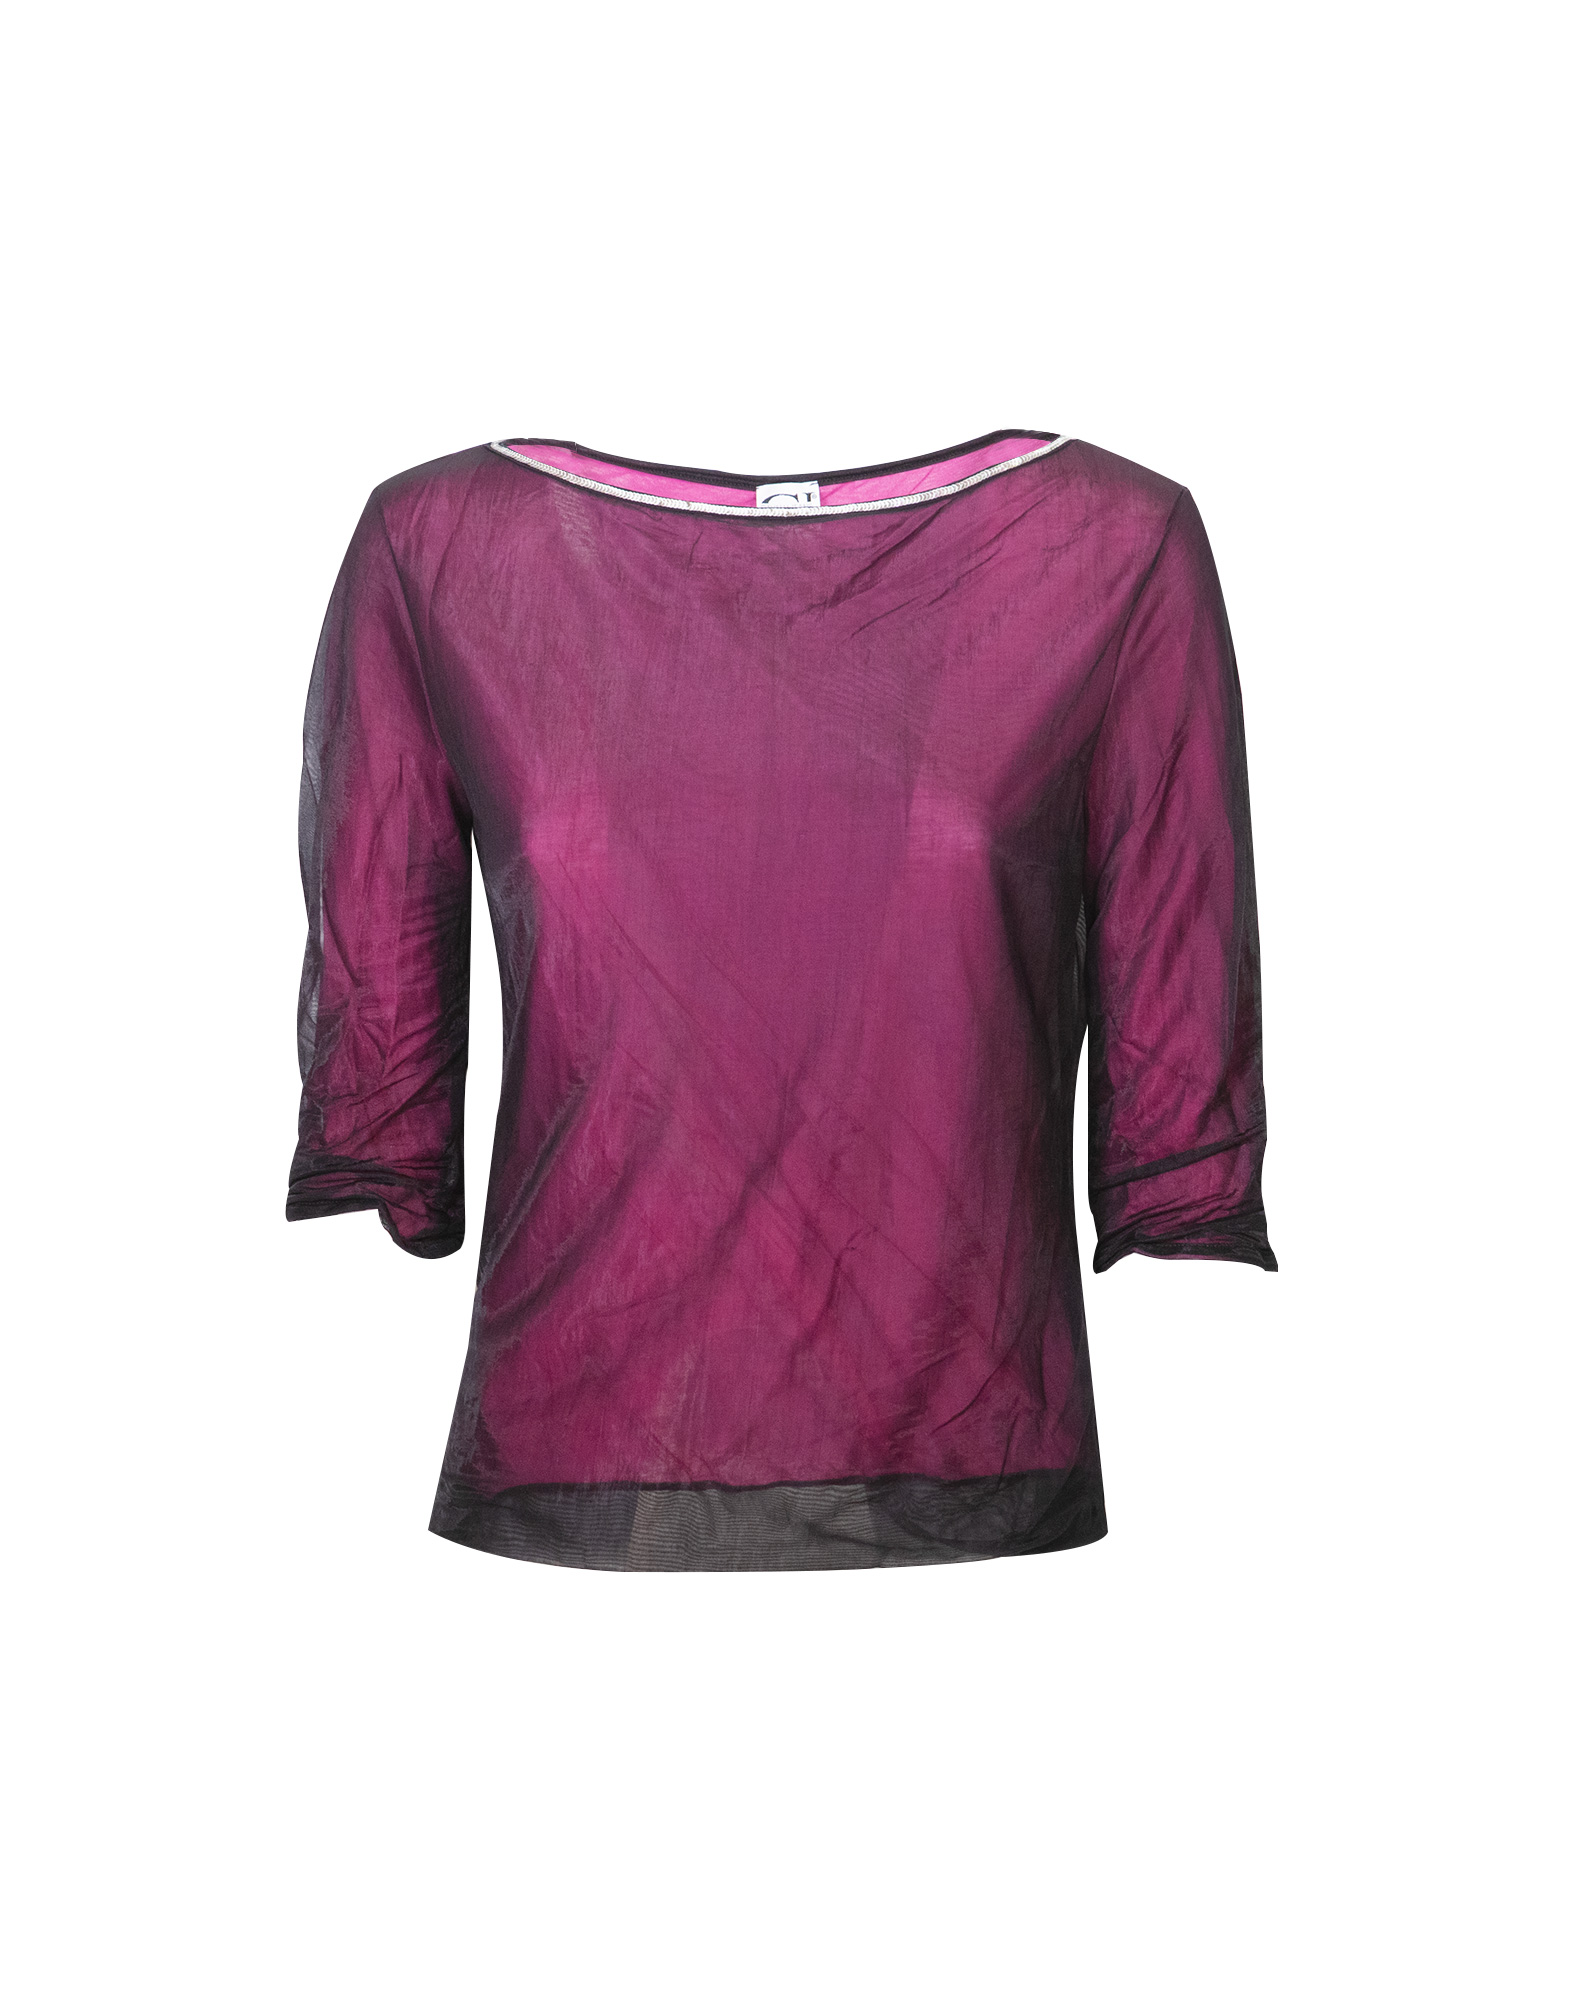 Just Cavalli - Purple T-shirt in mesh fabric